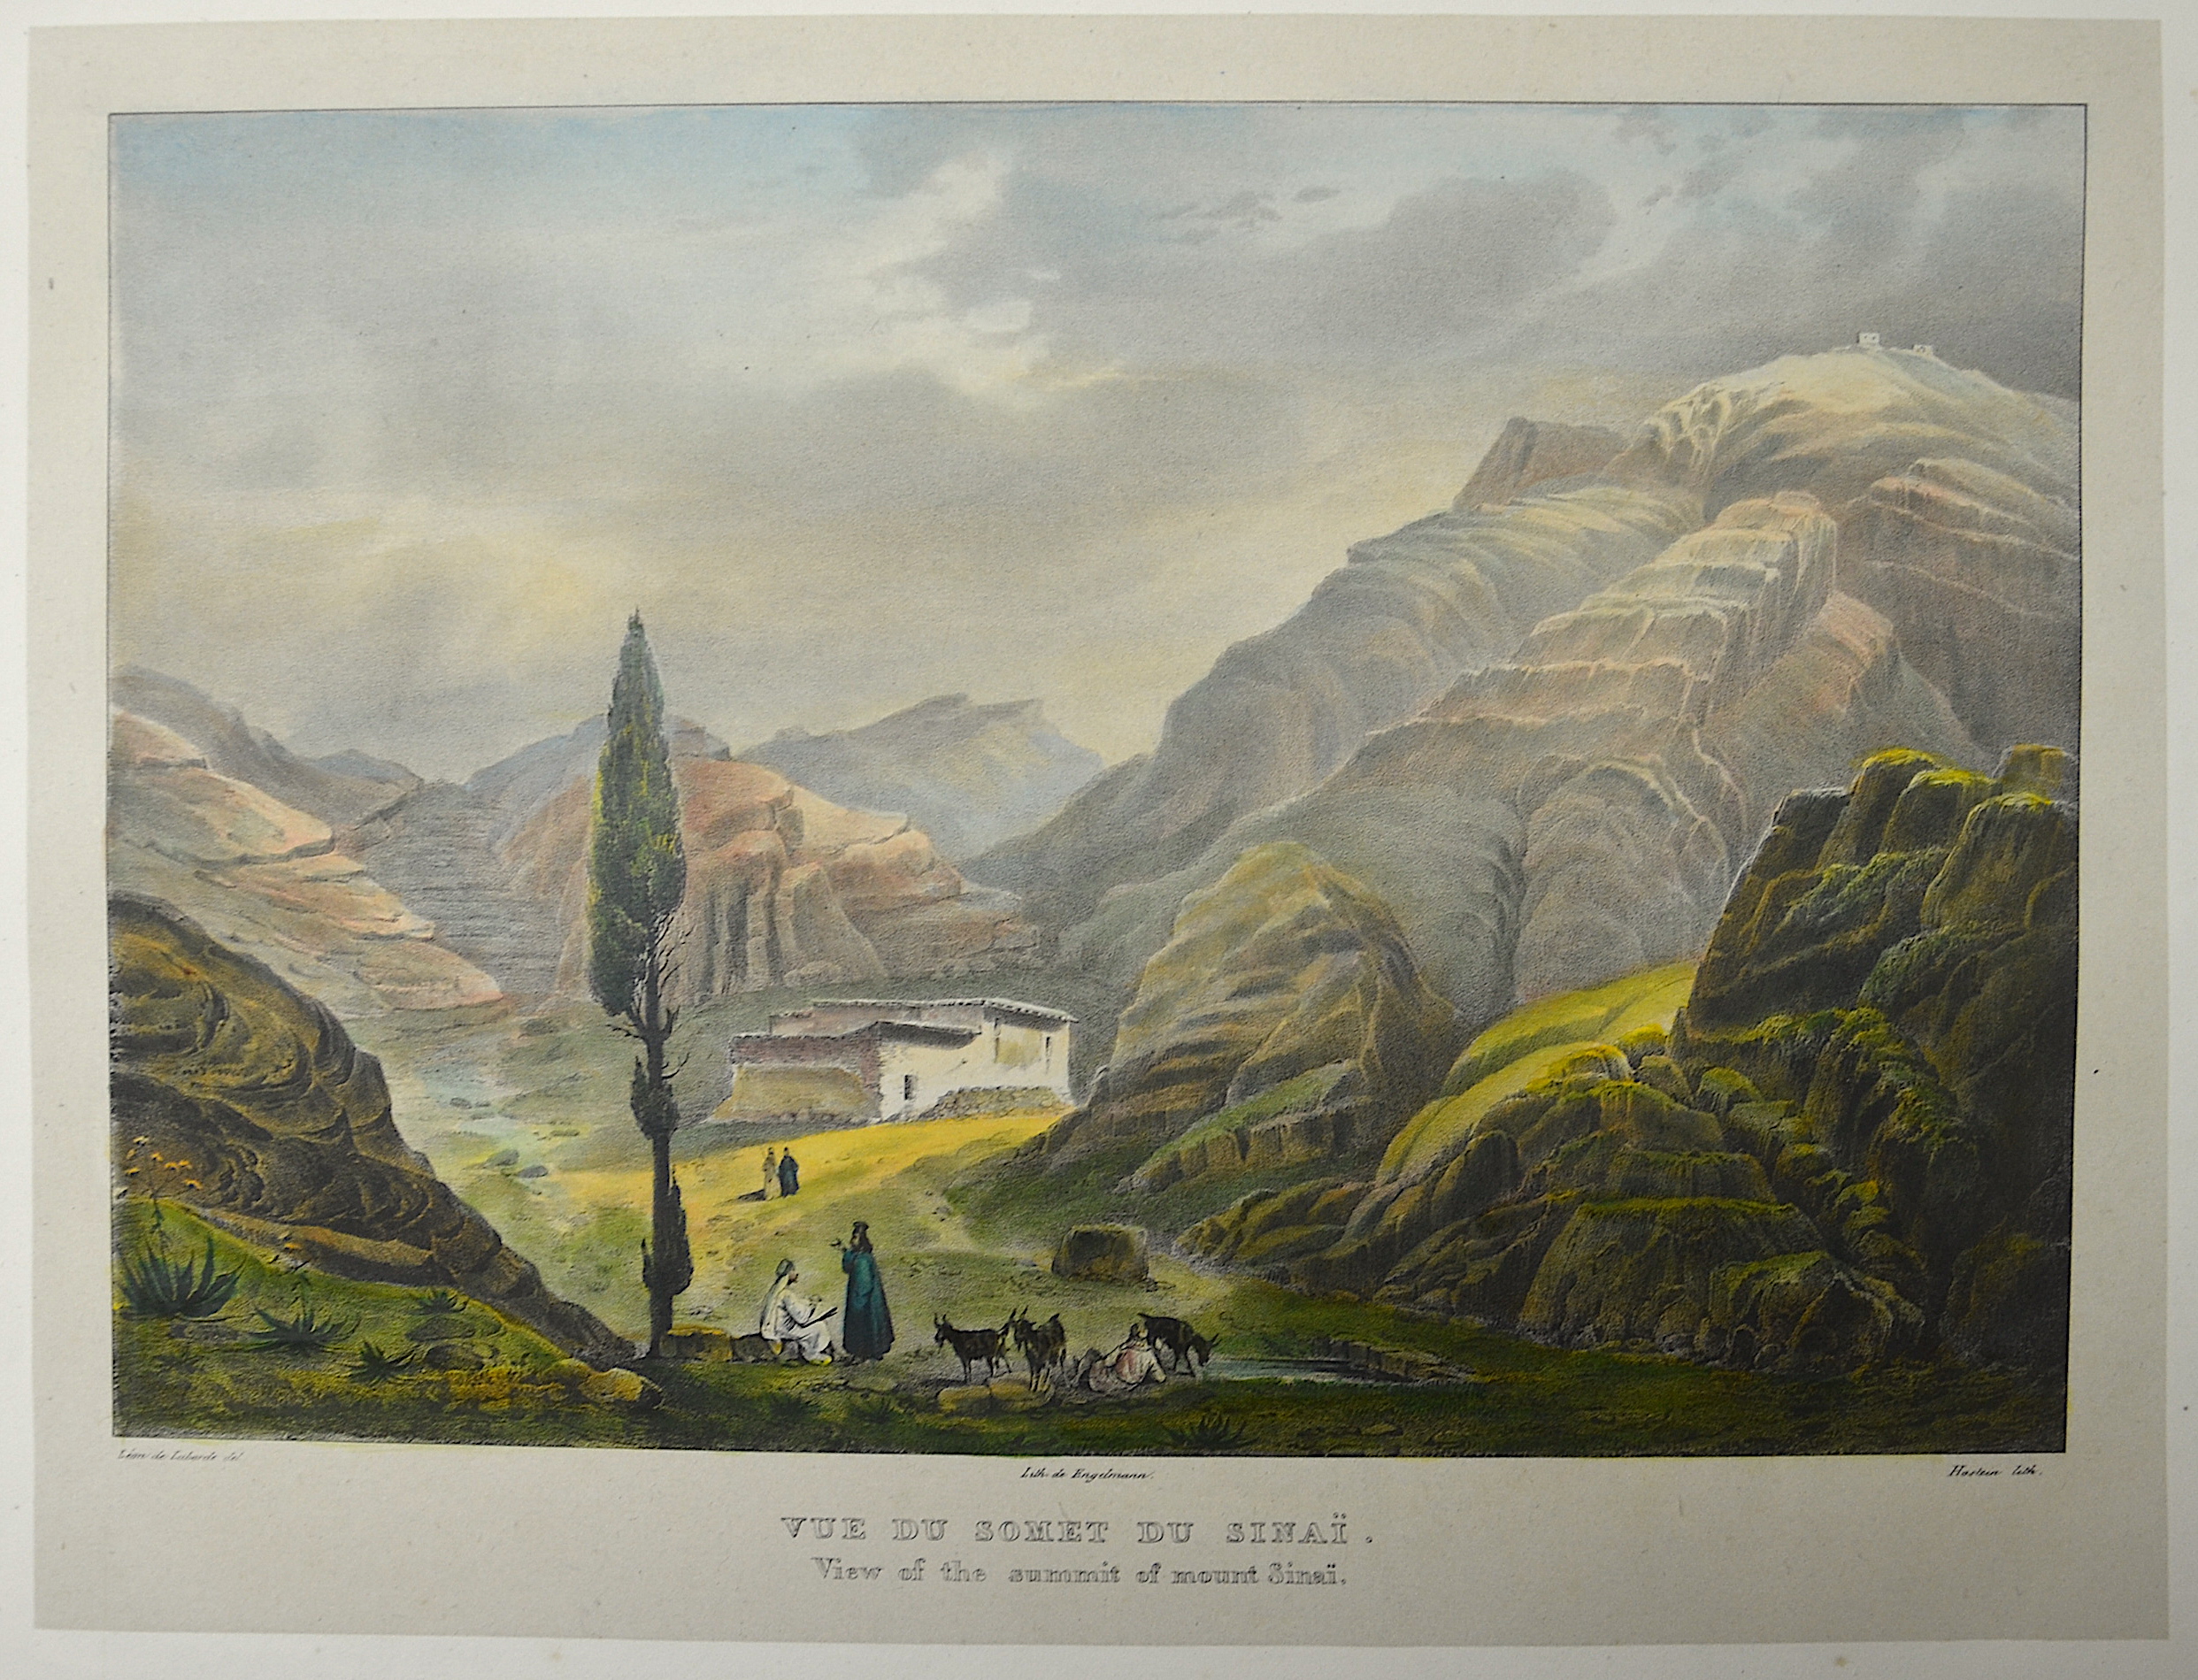 Engelmann Godefroy Vue du Somet du Sinai/ View of the Summet of mount Sinai